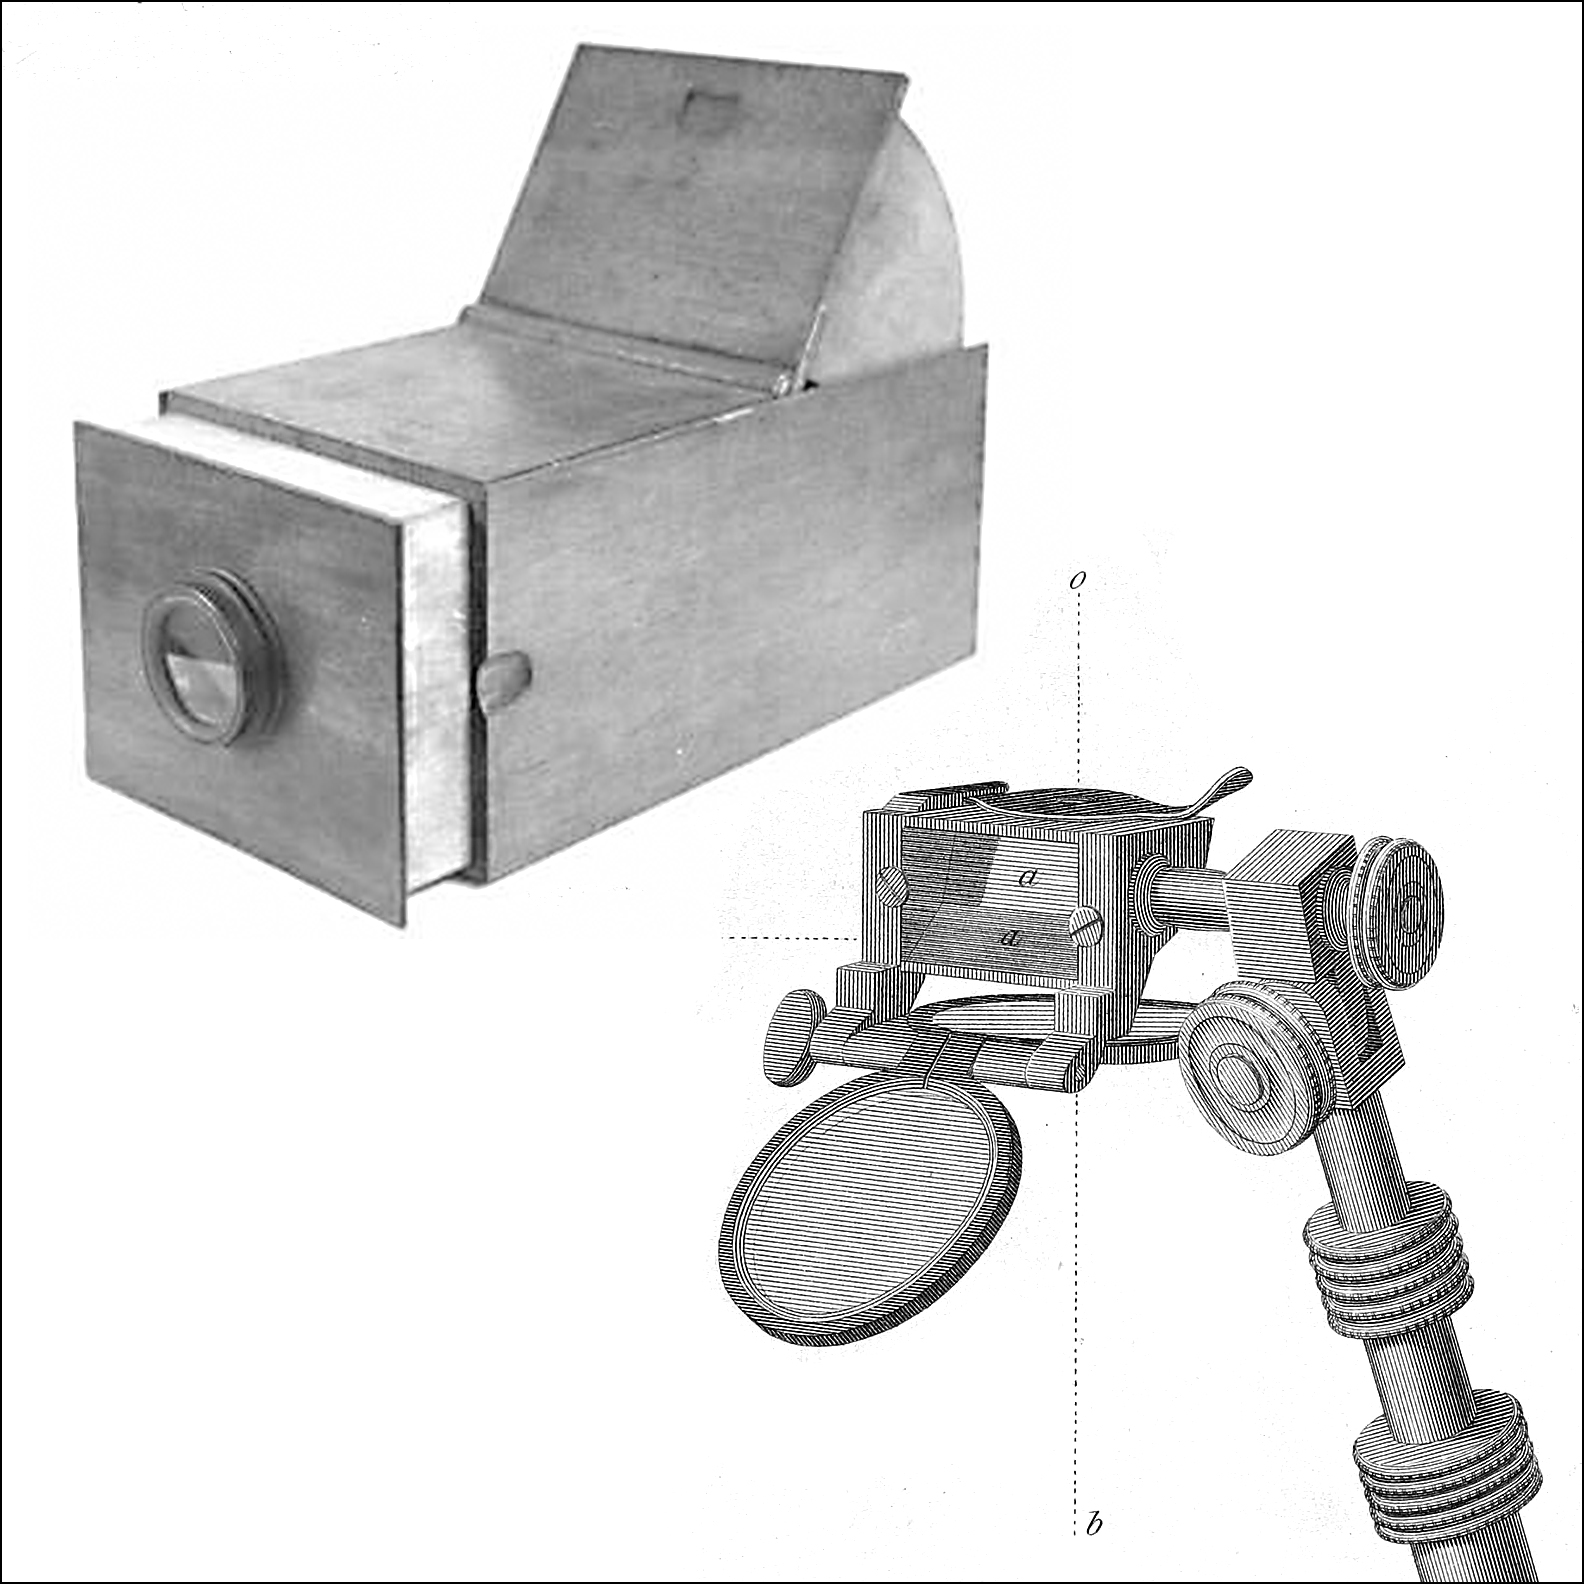 History of the Camera Lucida Drawing Tool 